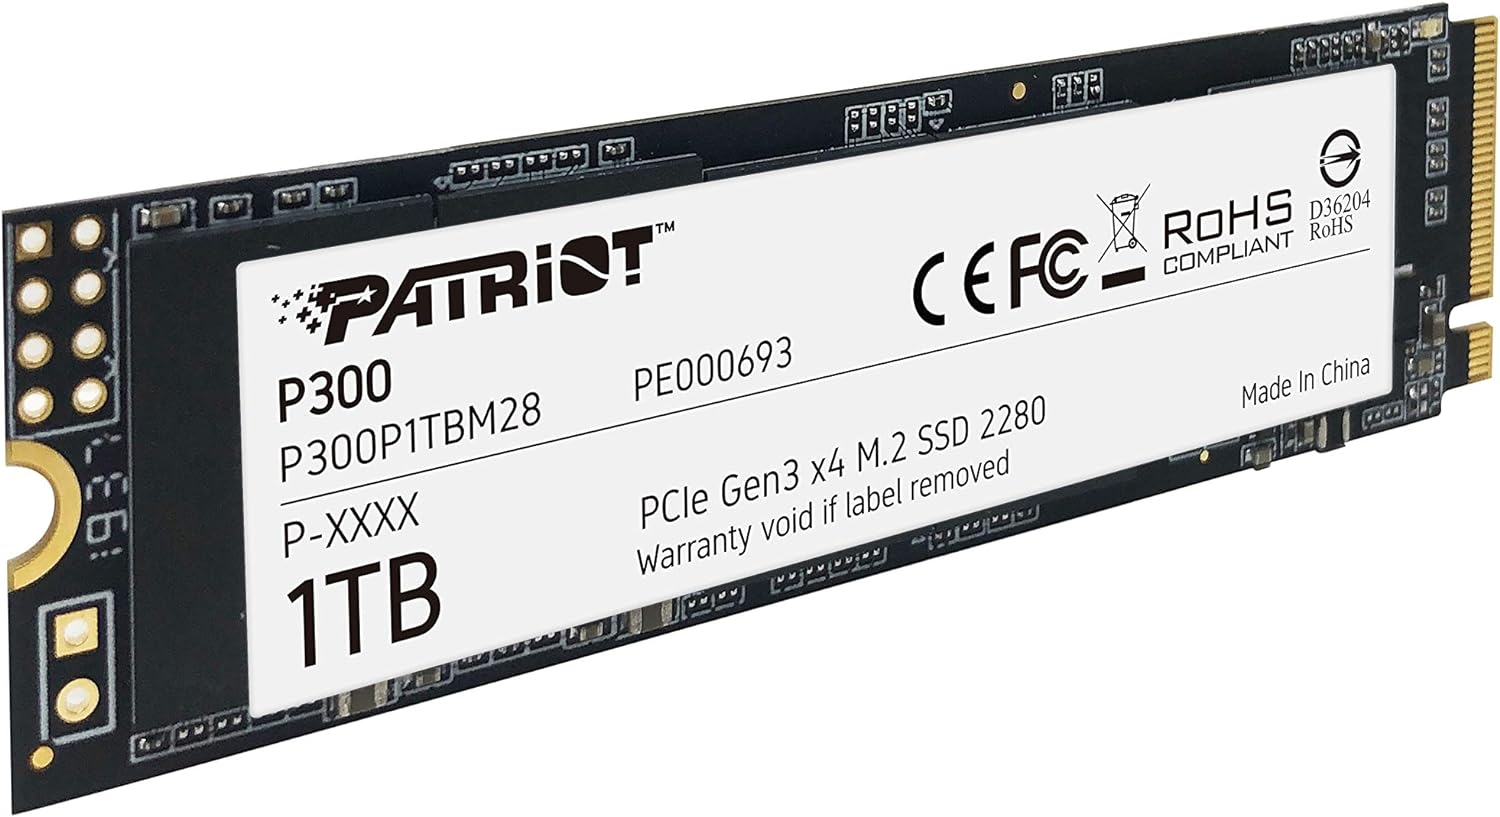 PATRIOT SSD P300 1TB M.2 2280 PCI GEN3